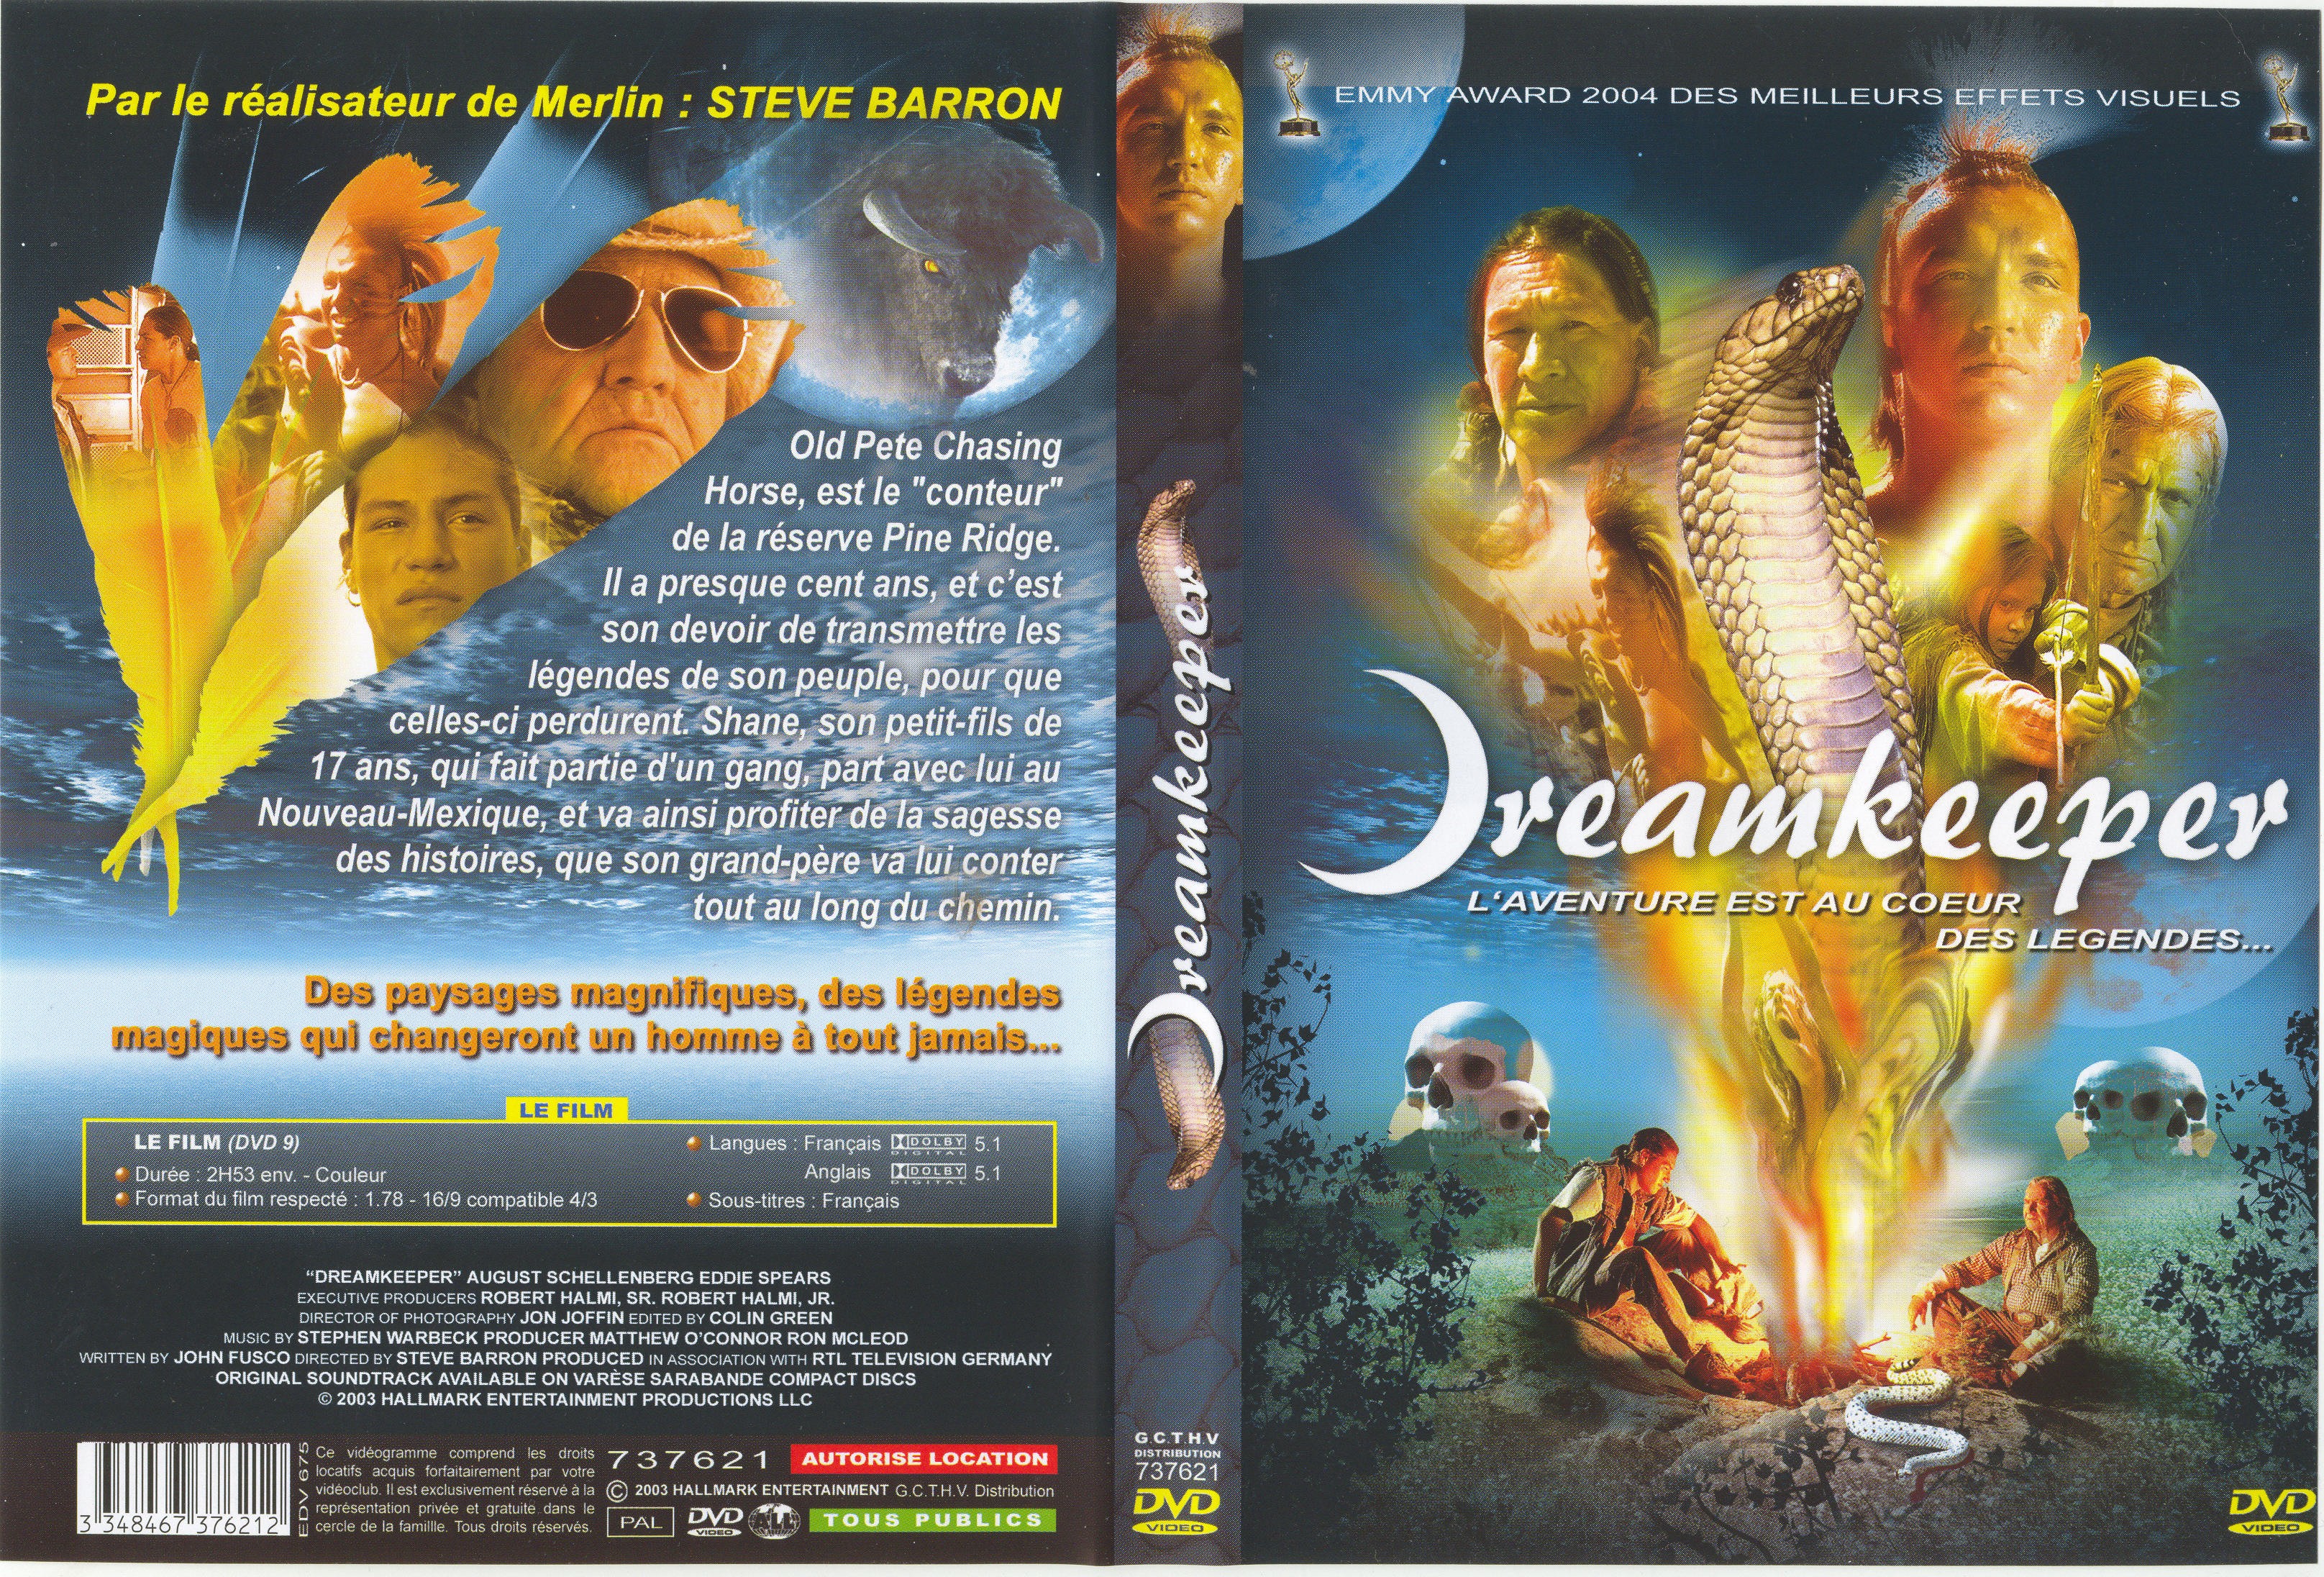 Jaquette DVD Dreamkeeper